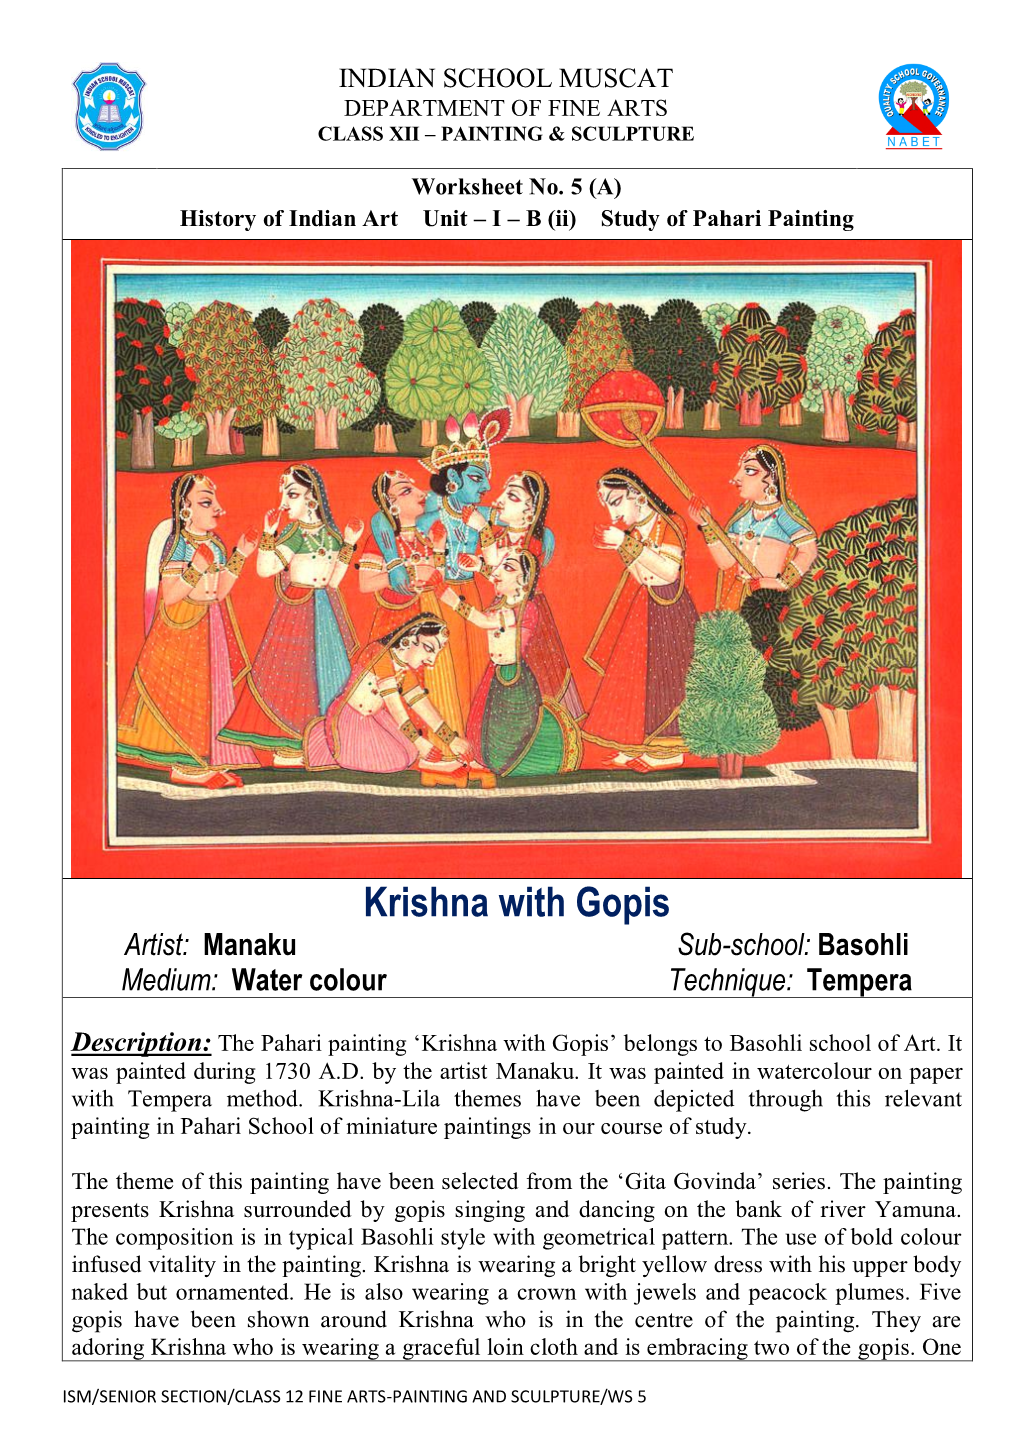 Krishna with Gopis Artist: Manaku Sub-School: Basohli Medium: Water Colour Technique: Tempera